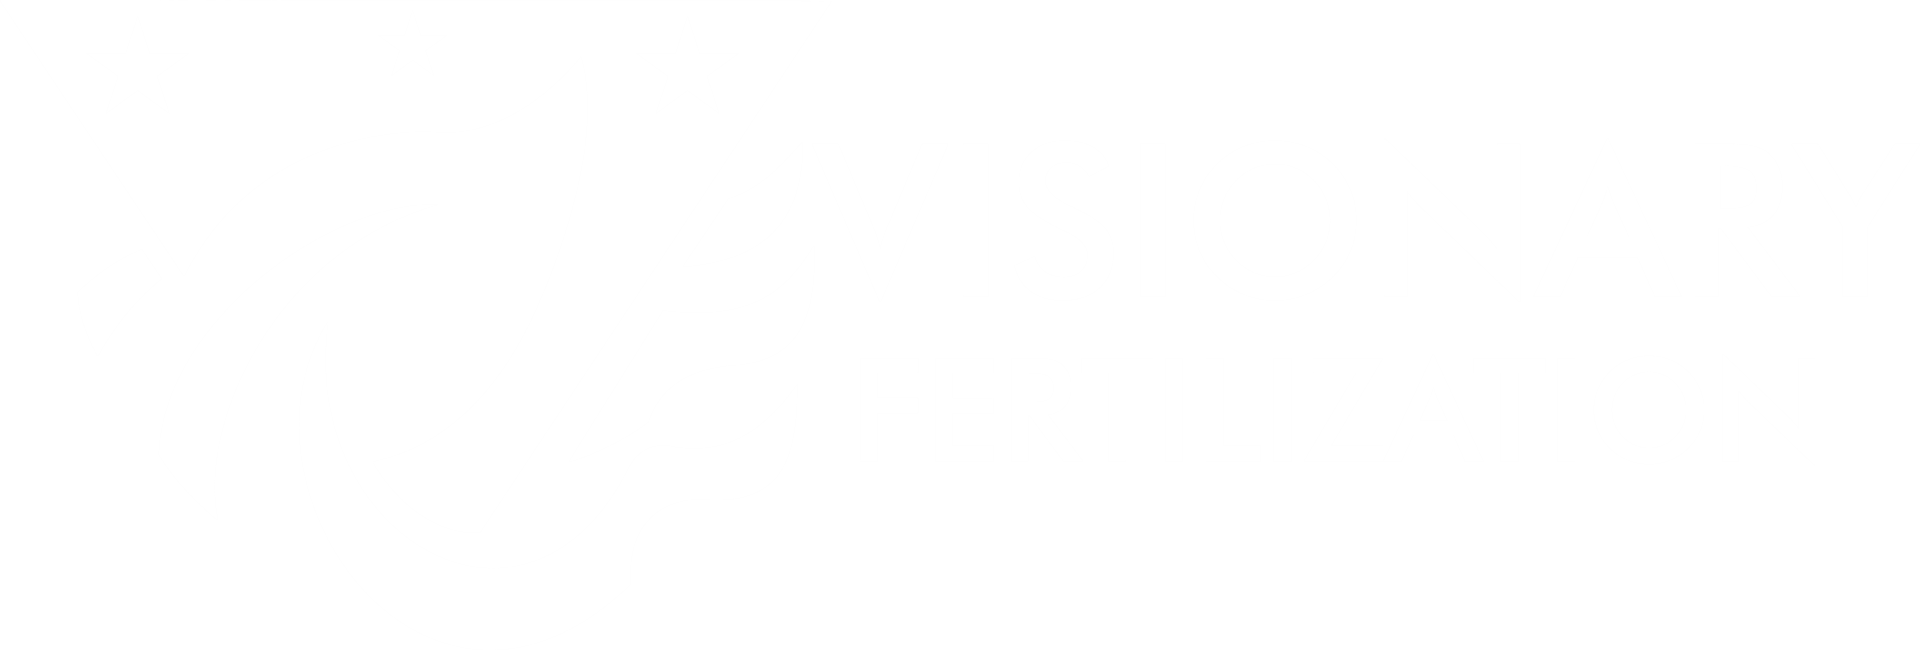 Lawn Fertilization & Pest Control in Shelby Township MI - Visionary Fertilization